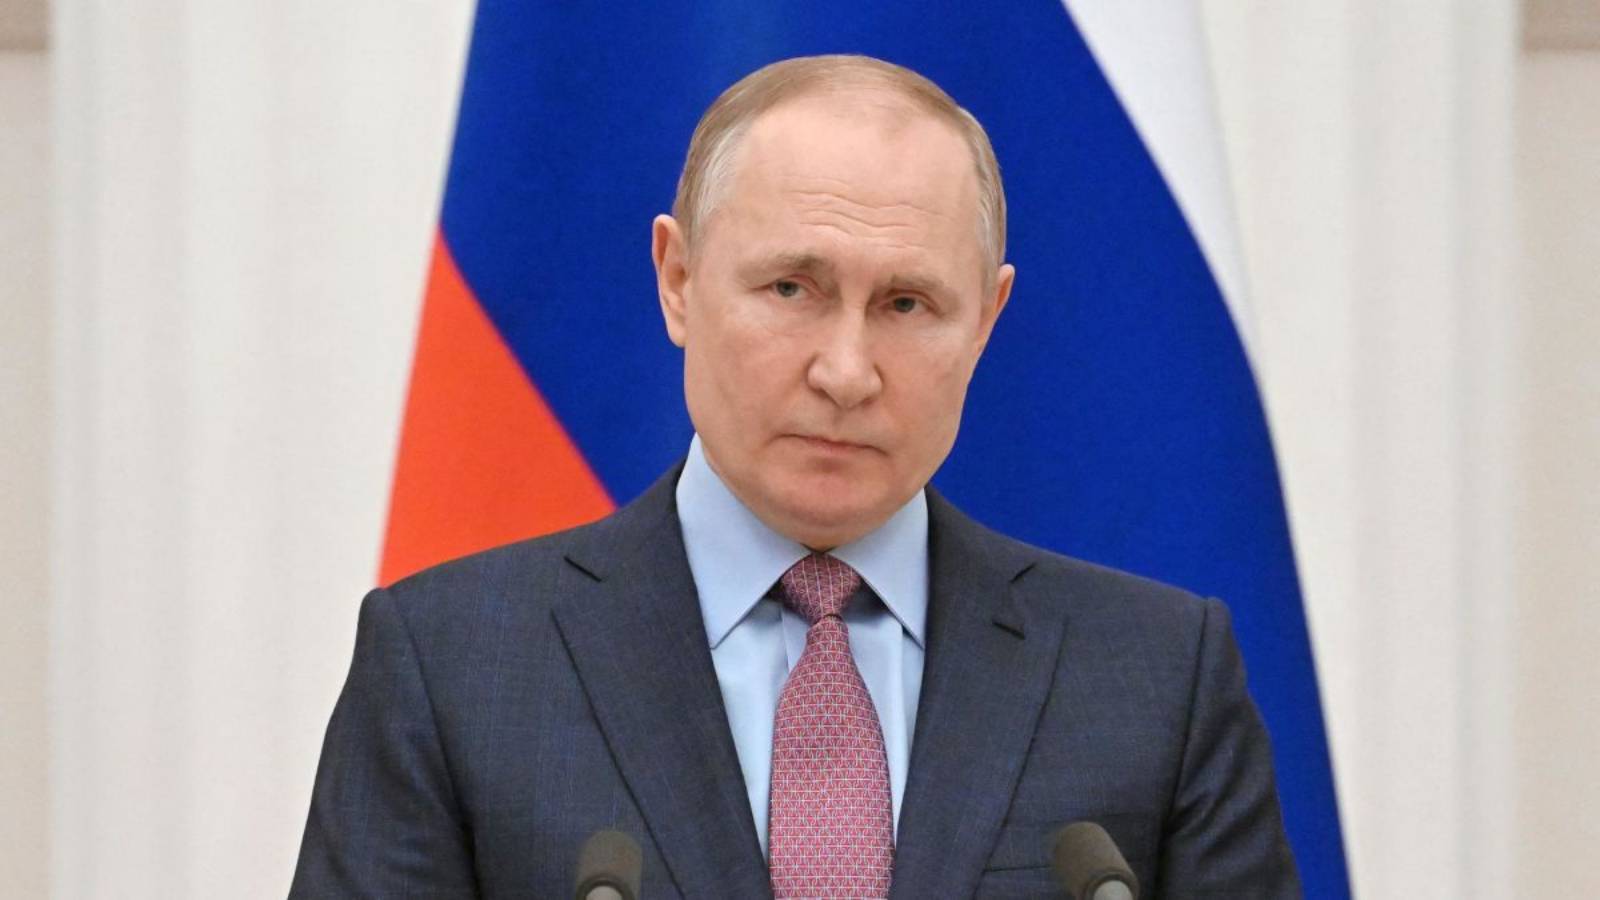 Vladimir Poetin-decreet Belangrijke beslissing Oekraïne